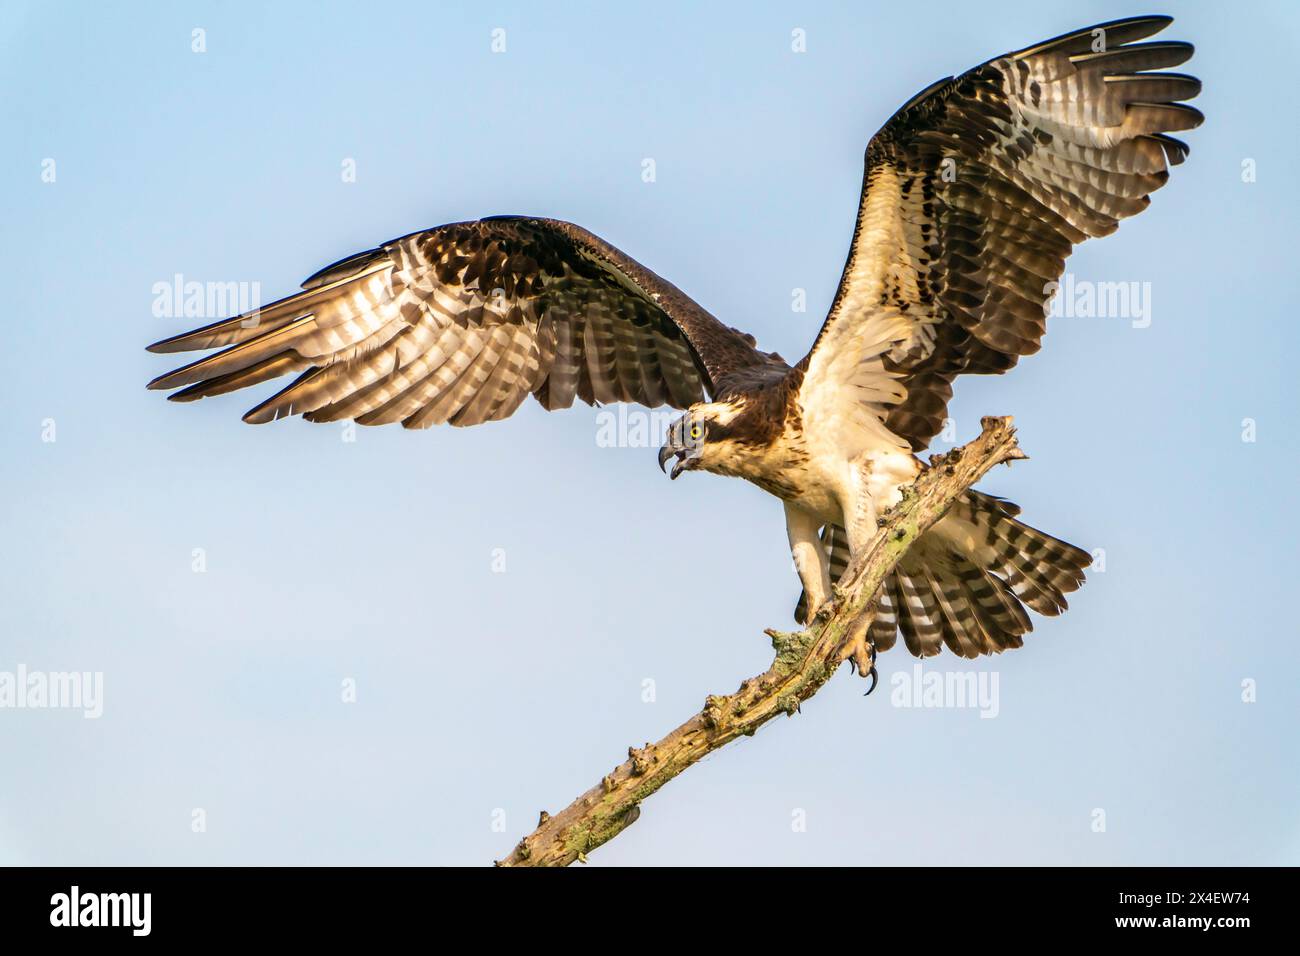 USA, Louisiana, bacino di Atchafalaya, palude di Atchafalaya. Osprey atterra sull'arto. Foto Stock